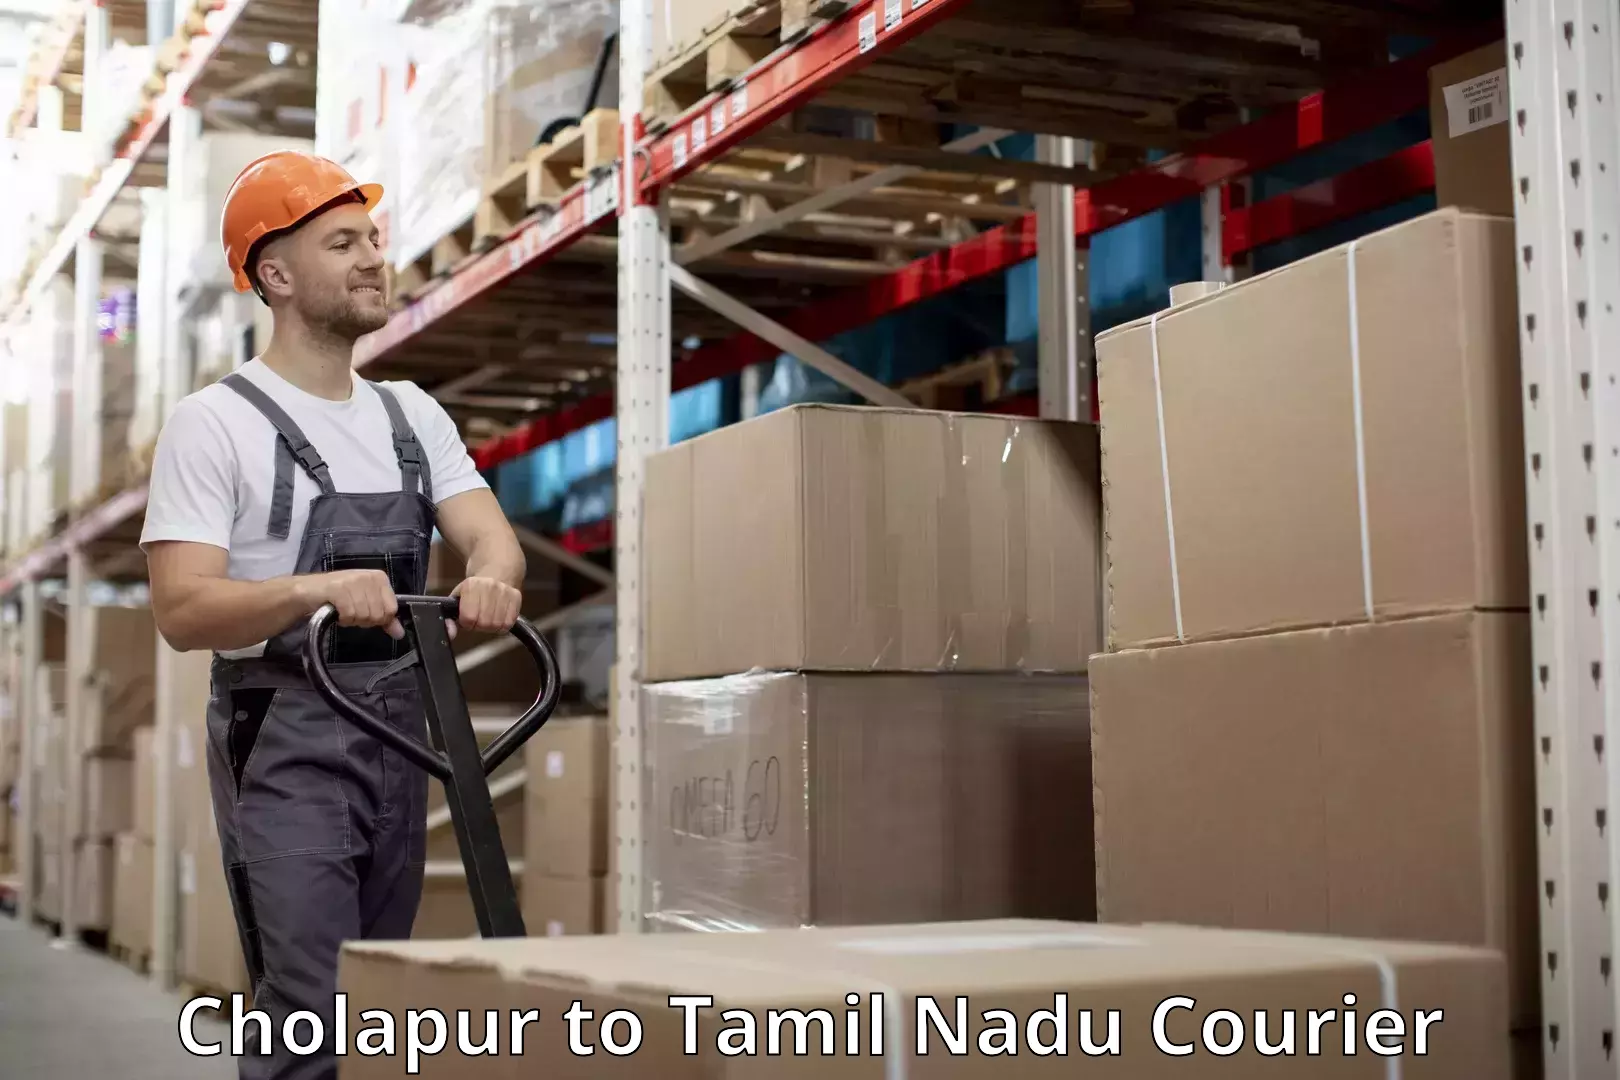 Luggage shipment processing Cholapur to Tamil Nadu